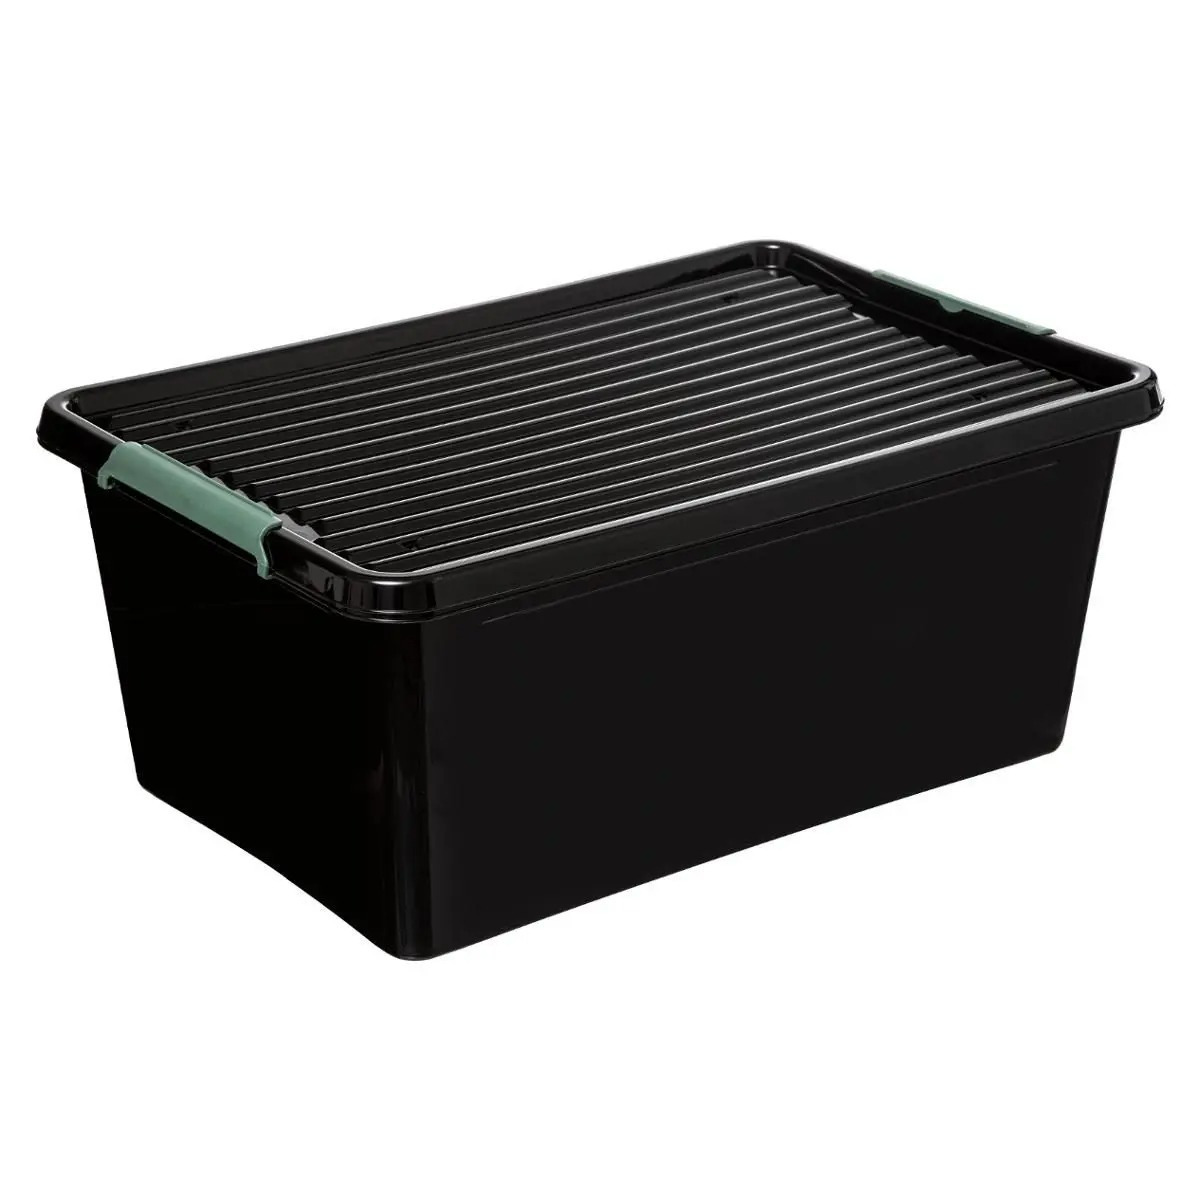 Opslagbak/organizer met deksel kunststof 40 liter 58 x 39 x 25,5 cm zwart